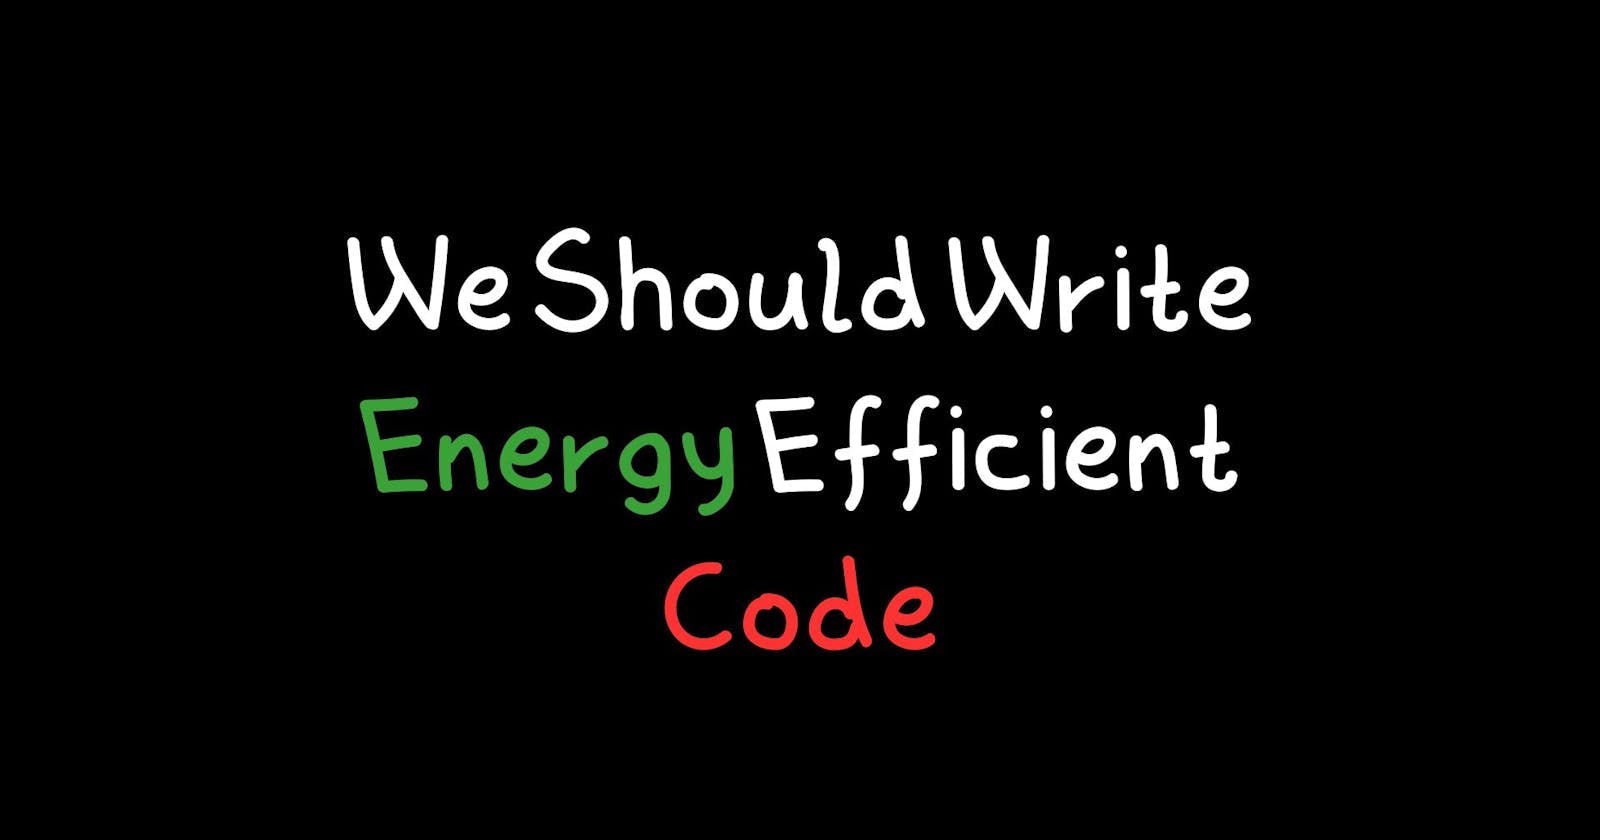 We Should Write Energy Efficient Code